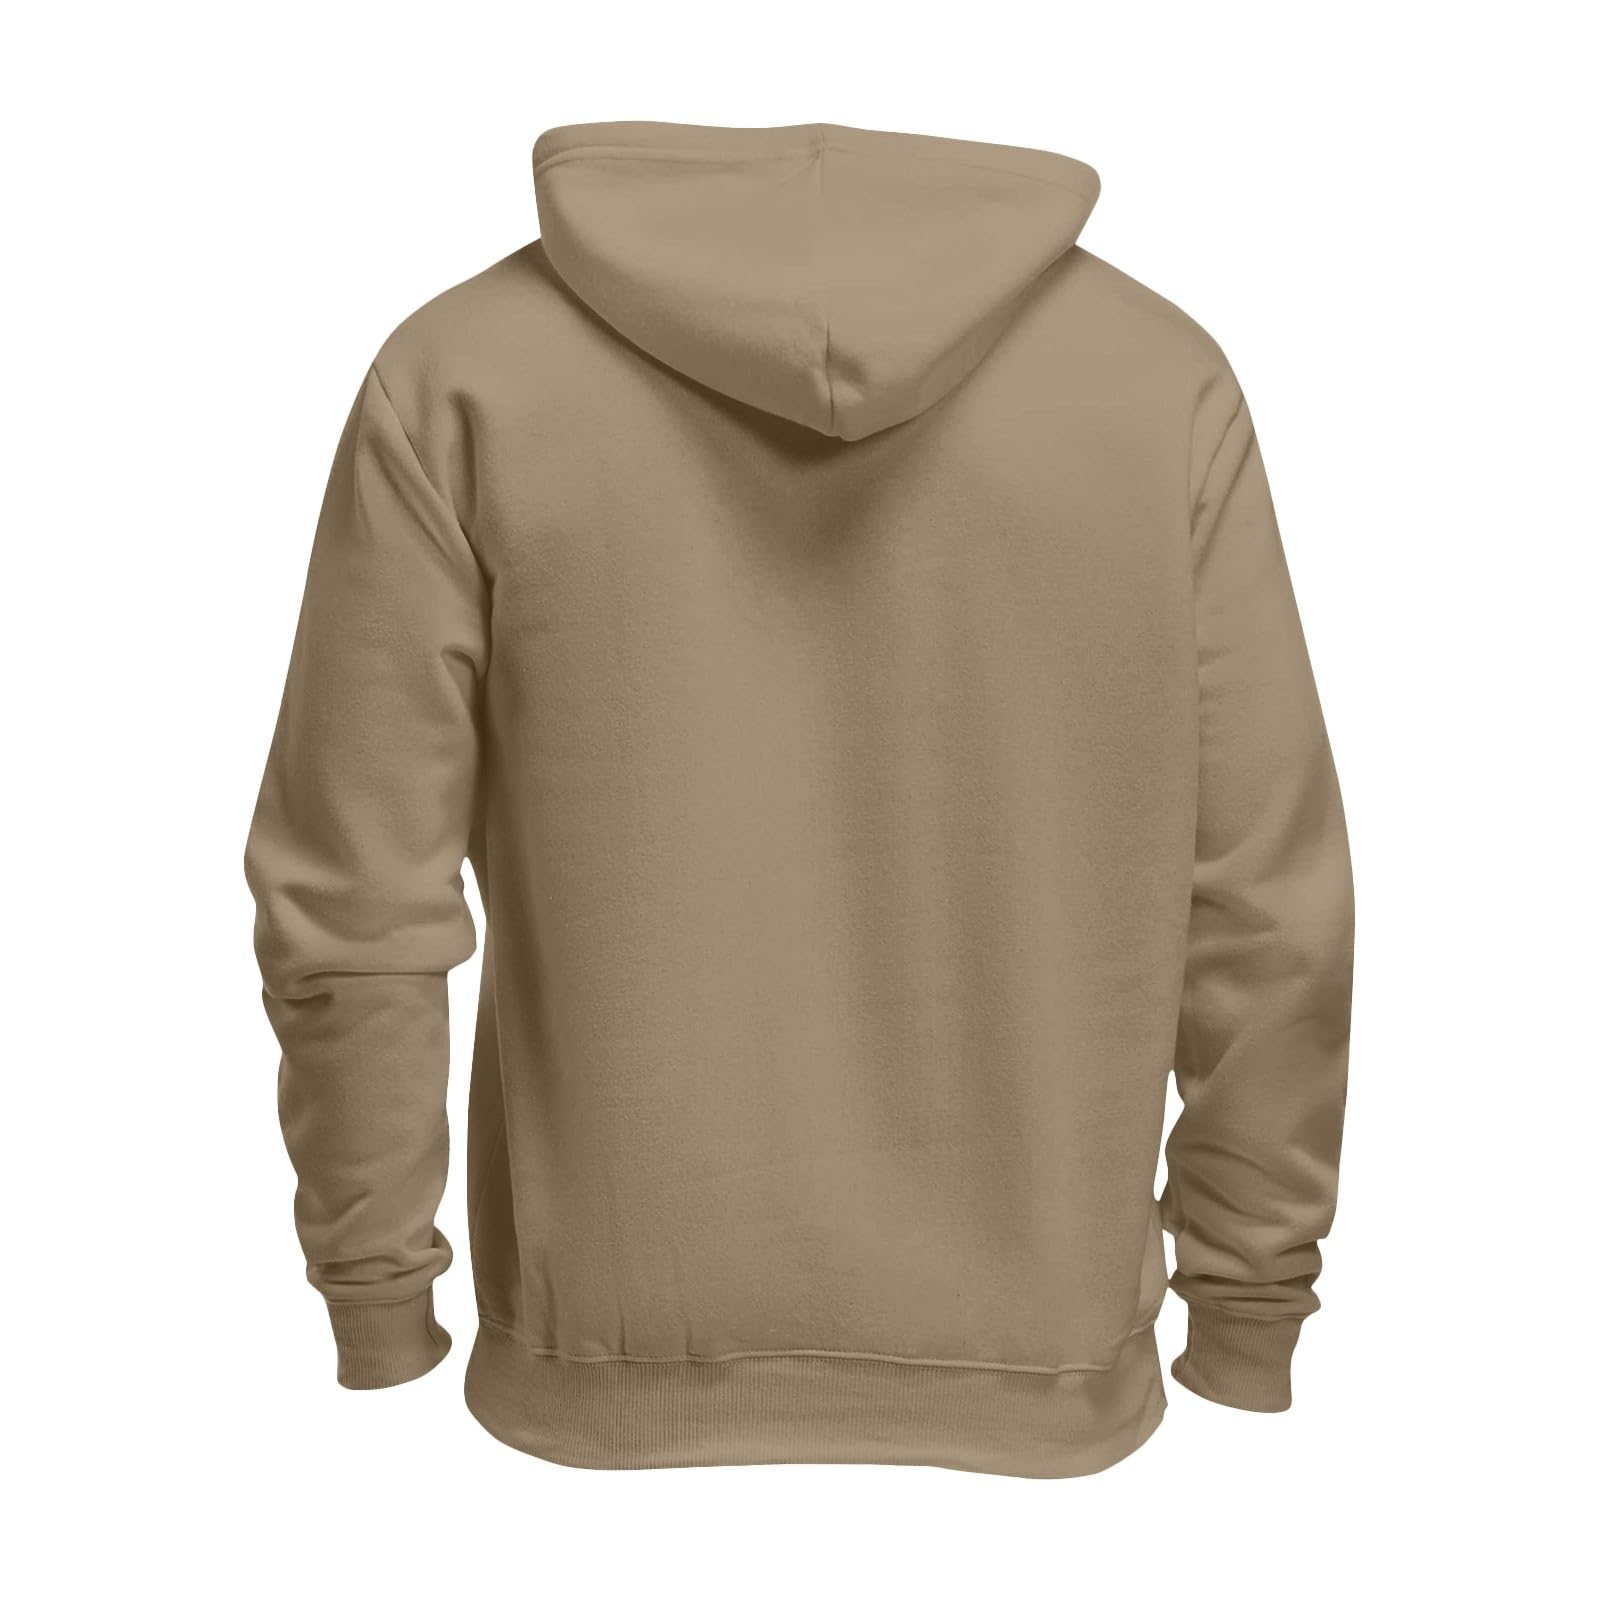 XIAXOGOOL Mens Lightweight Hoodies Plus Size Hoodie For Men Usa Letter Print Casual Long Sleeves Sweatshirt Pullover Tops